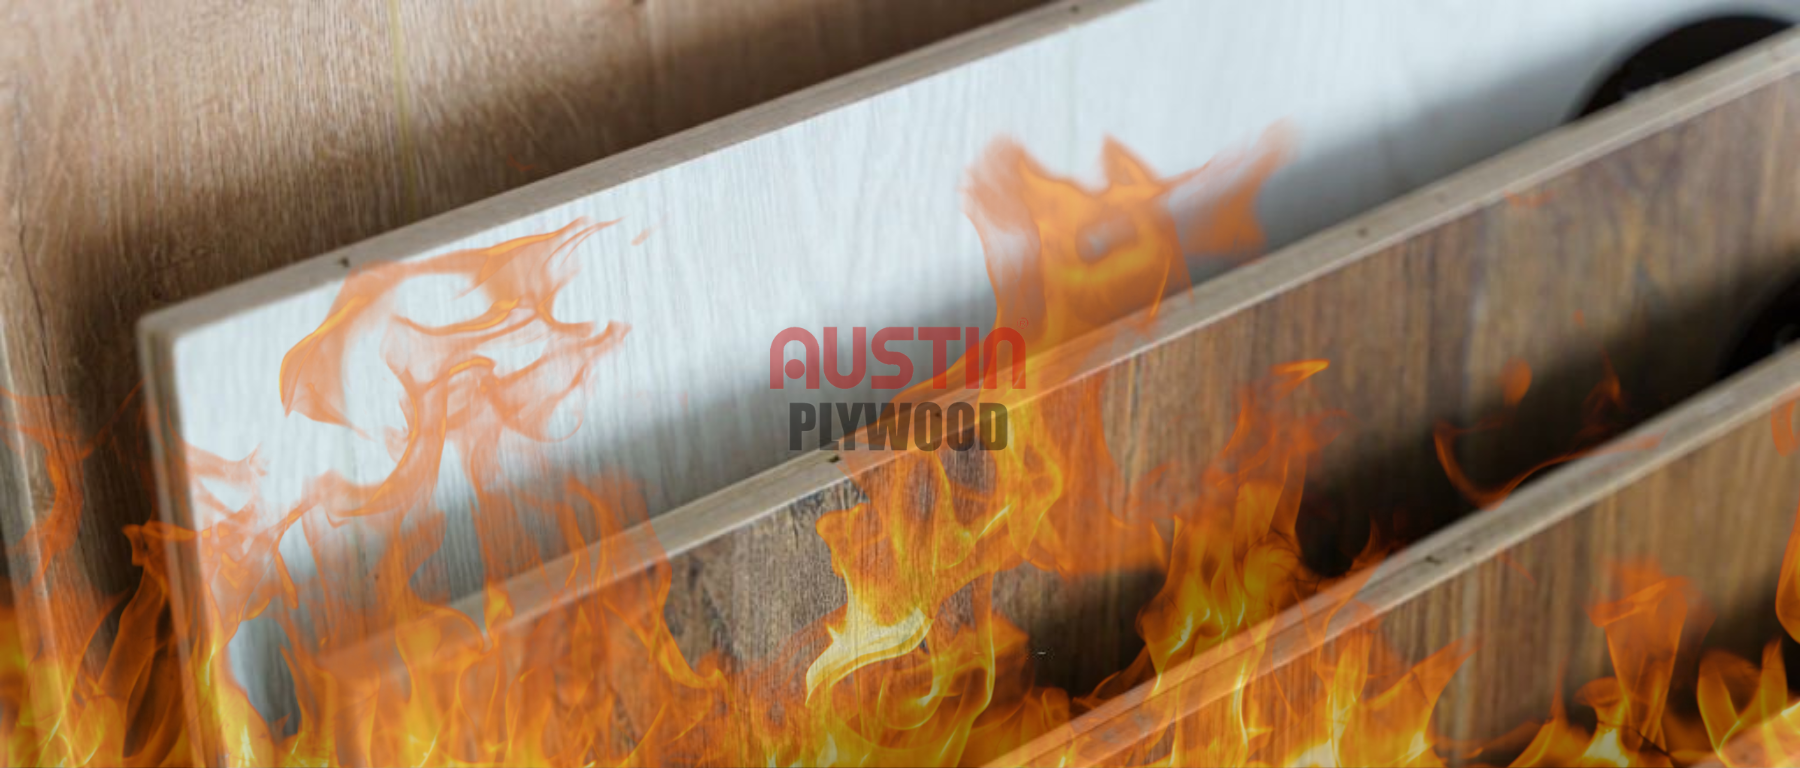 Austin Defender Fire Retardant Plywood, Best Plywood in India